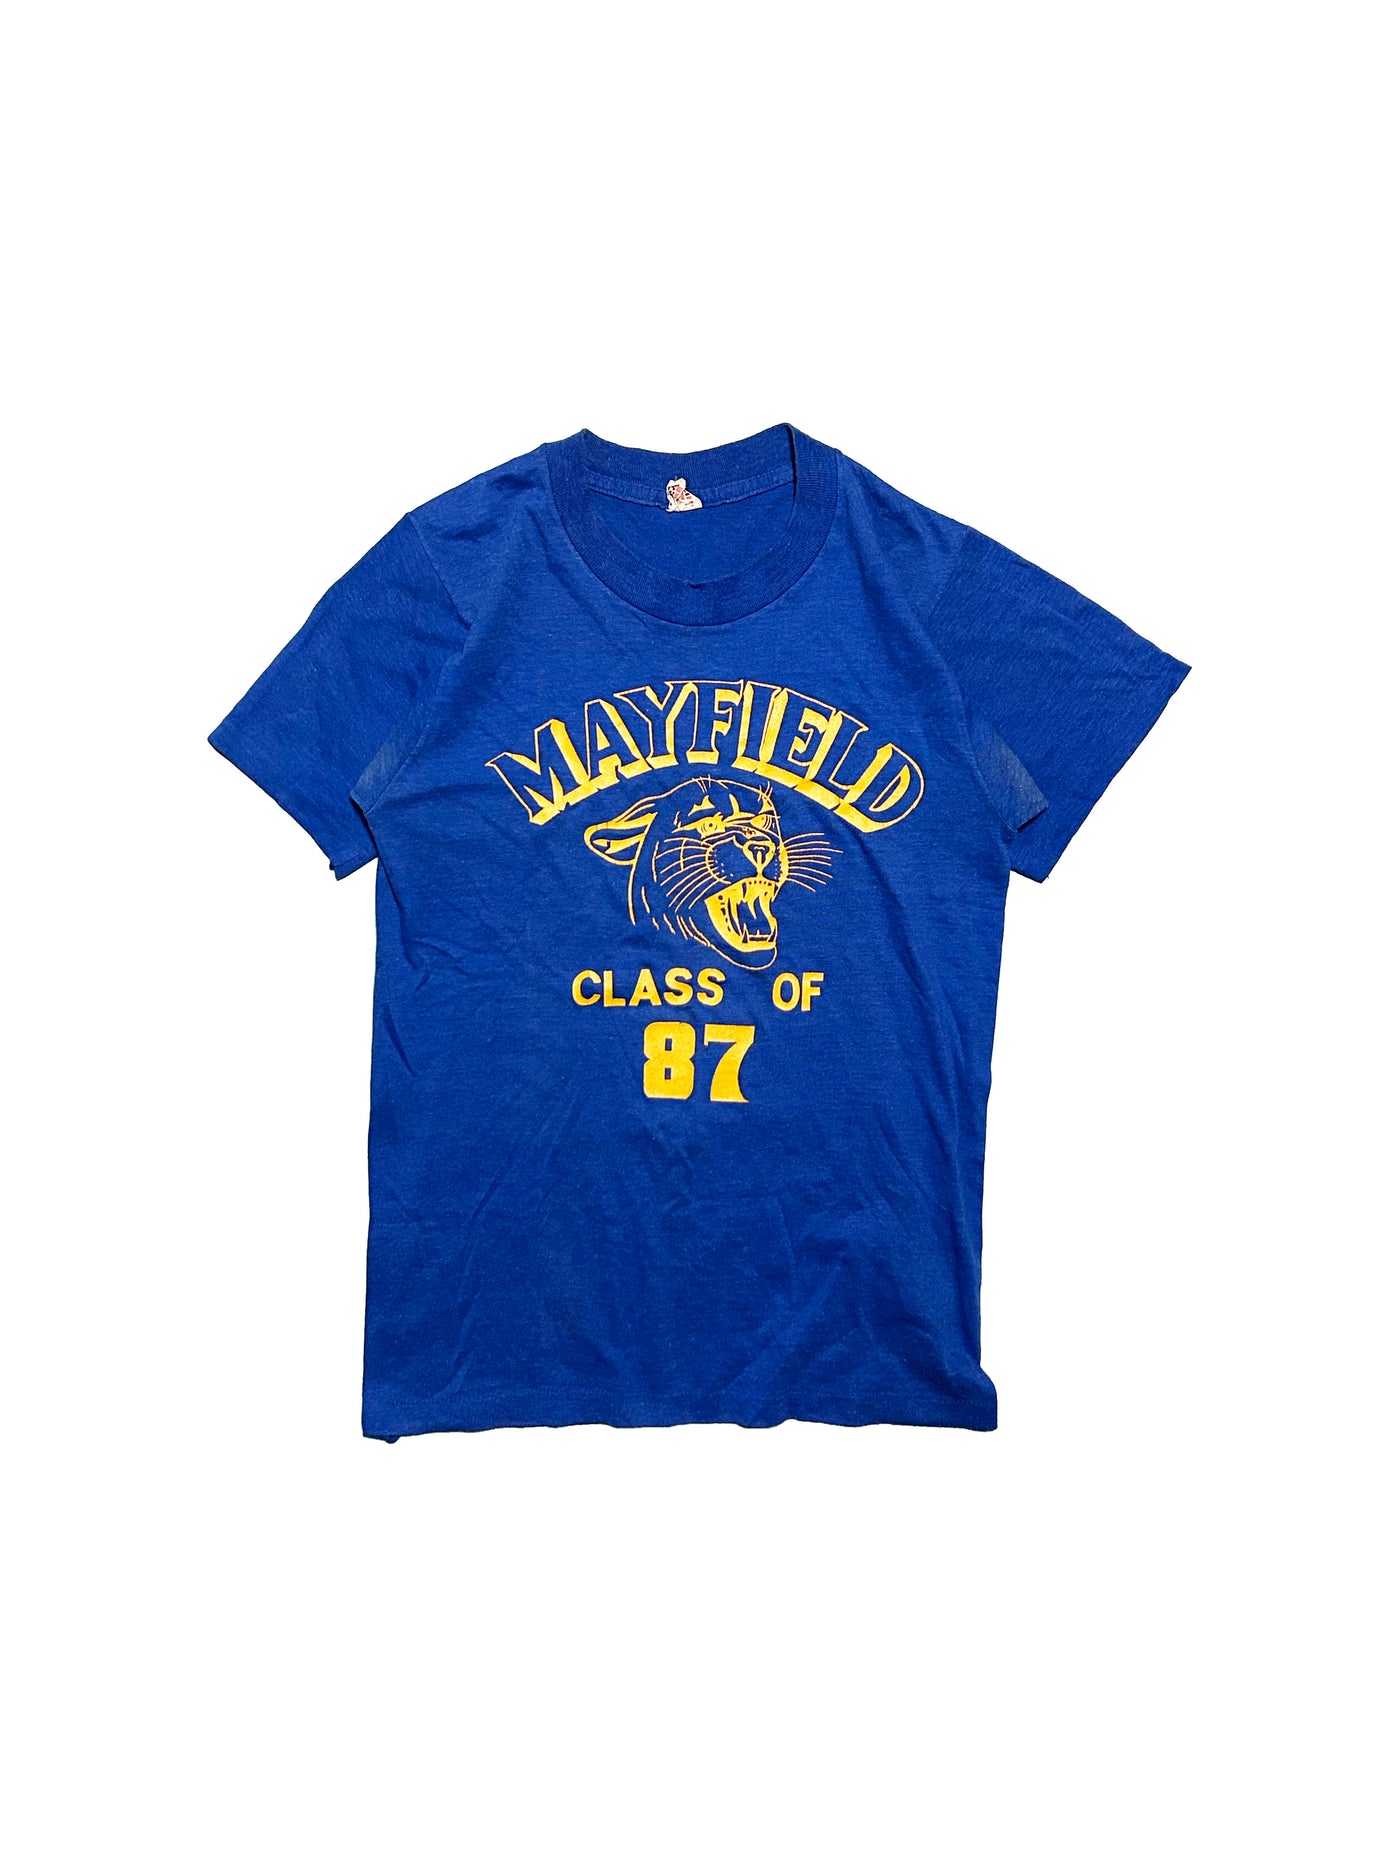 Vintage 1987 Mayfield, NY T-Shirt